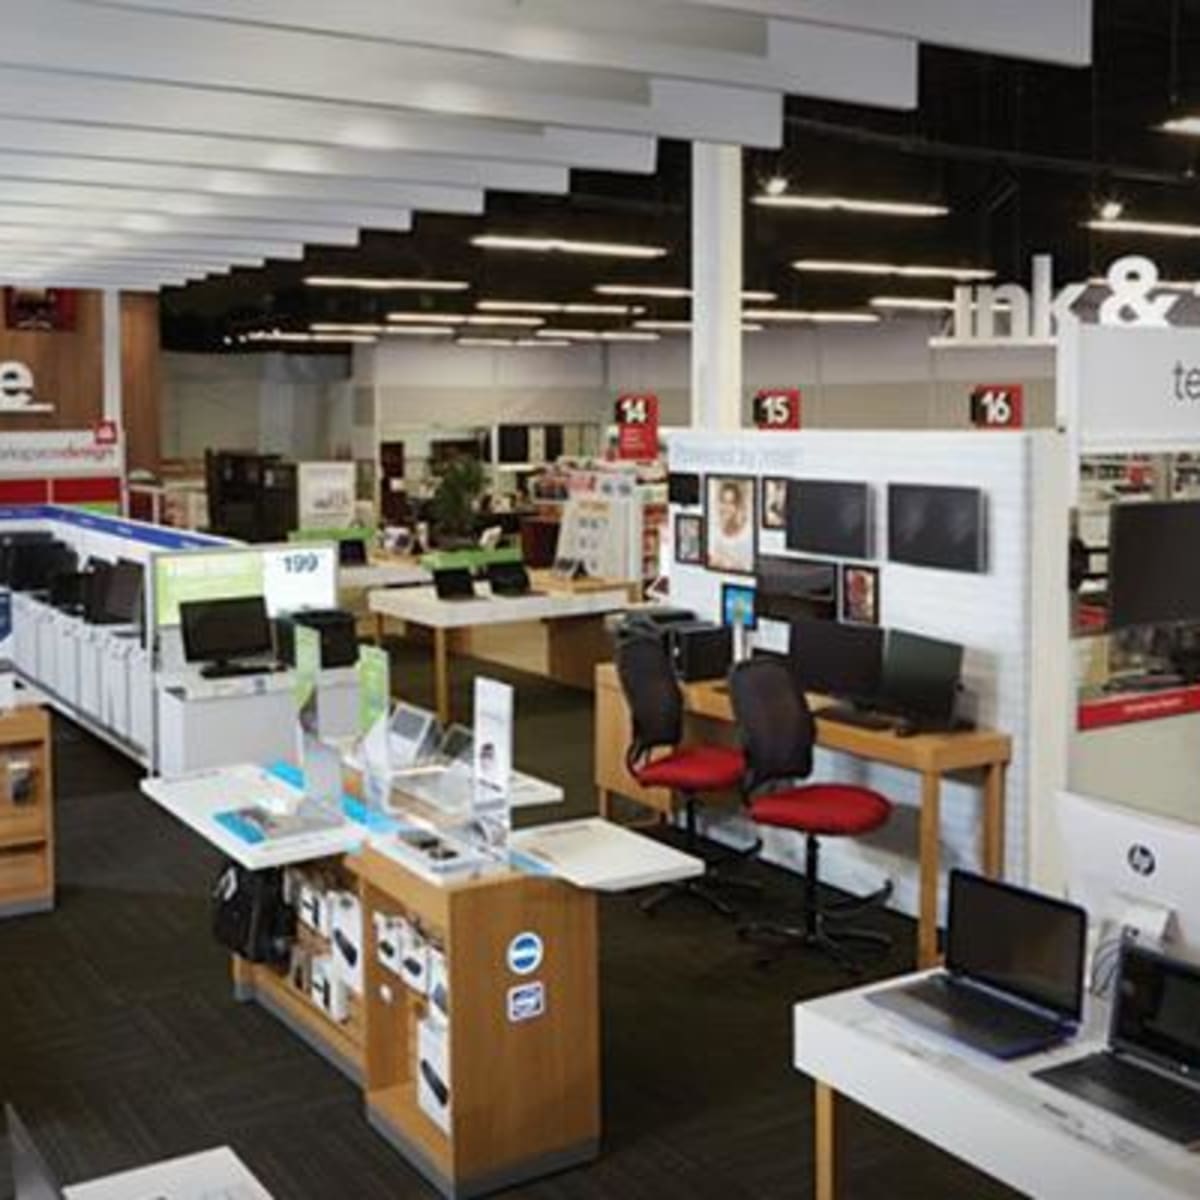 Office Depot (ODP) shares plunge on $1 billion CompuCom deal - TheStreet